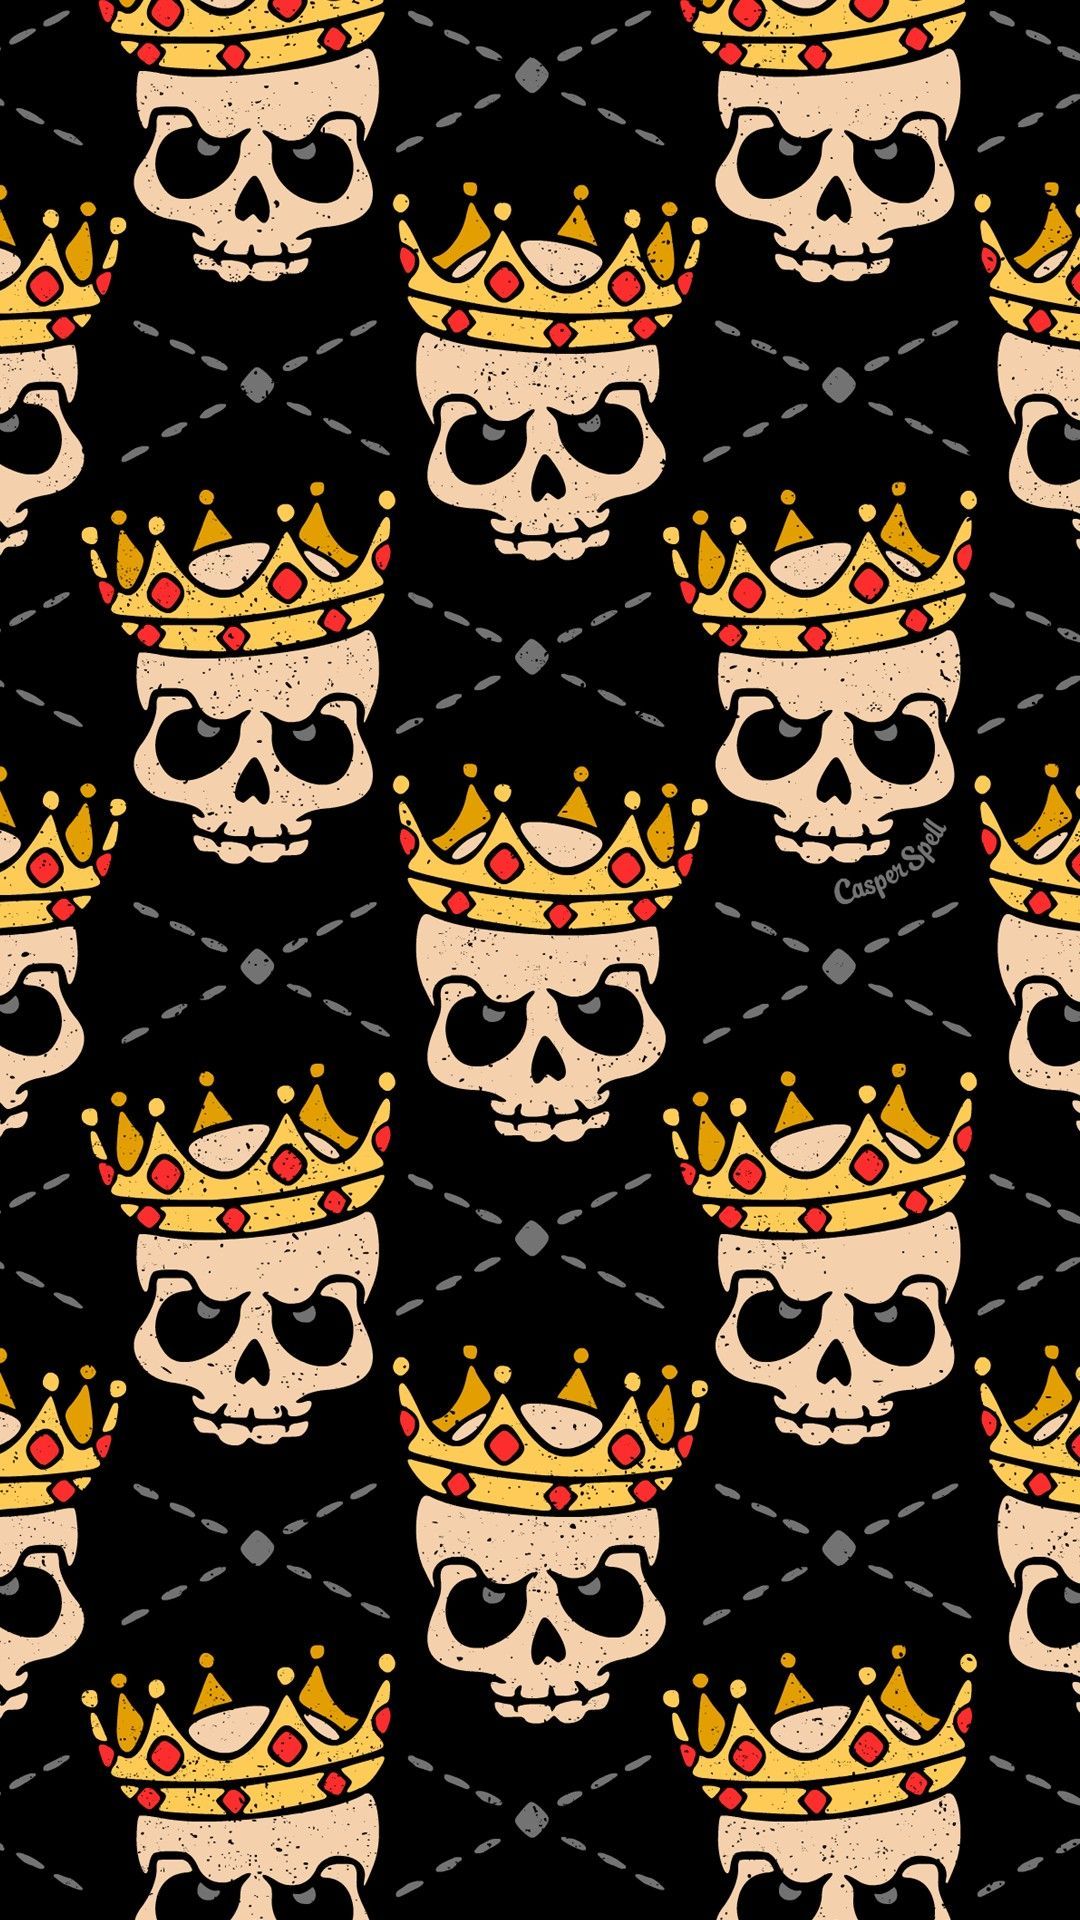 Skull Royal Royalty King Repeat Pattern Wallpaper Screensaver phone surface design art illustration drawi. Skull wallpaper, Halloween wallpaper, Pattern wallpaper